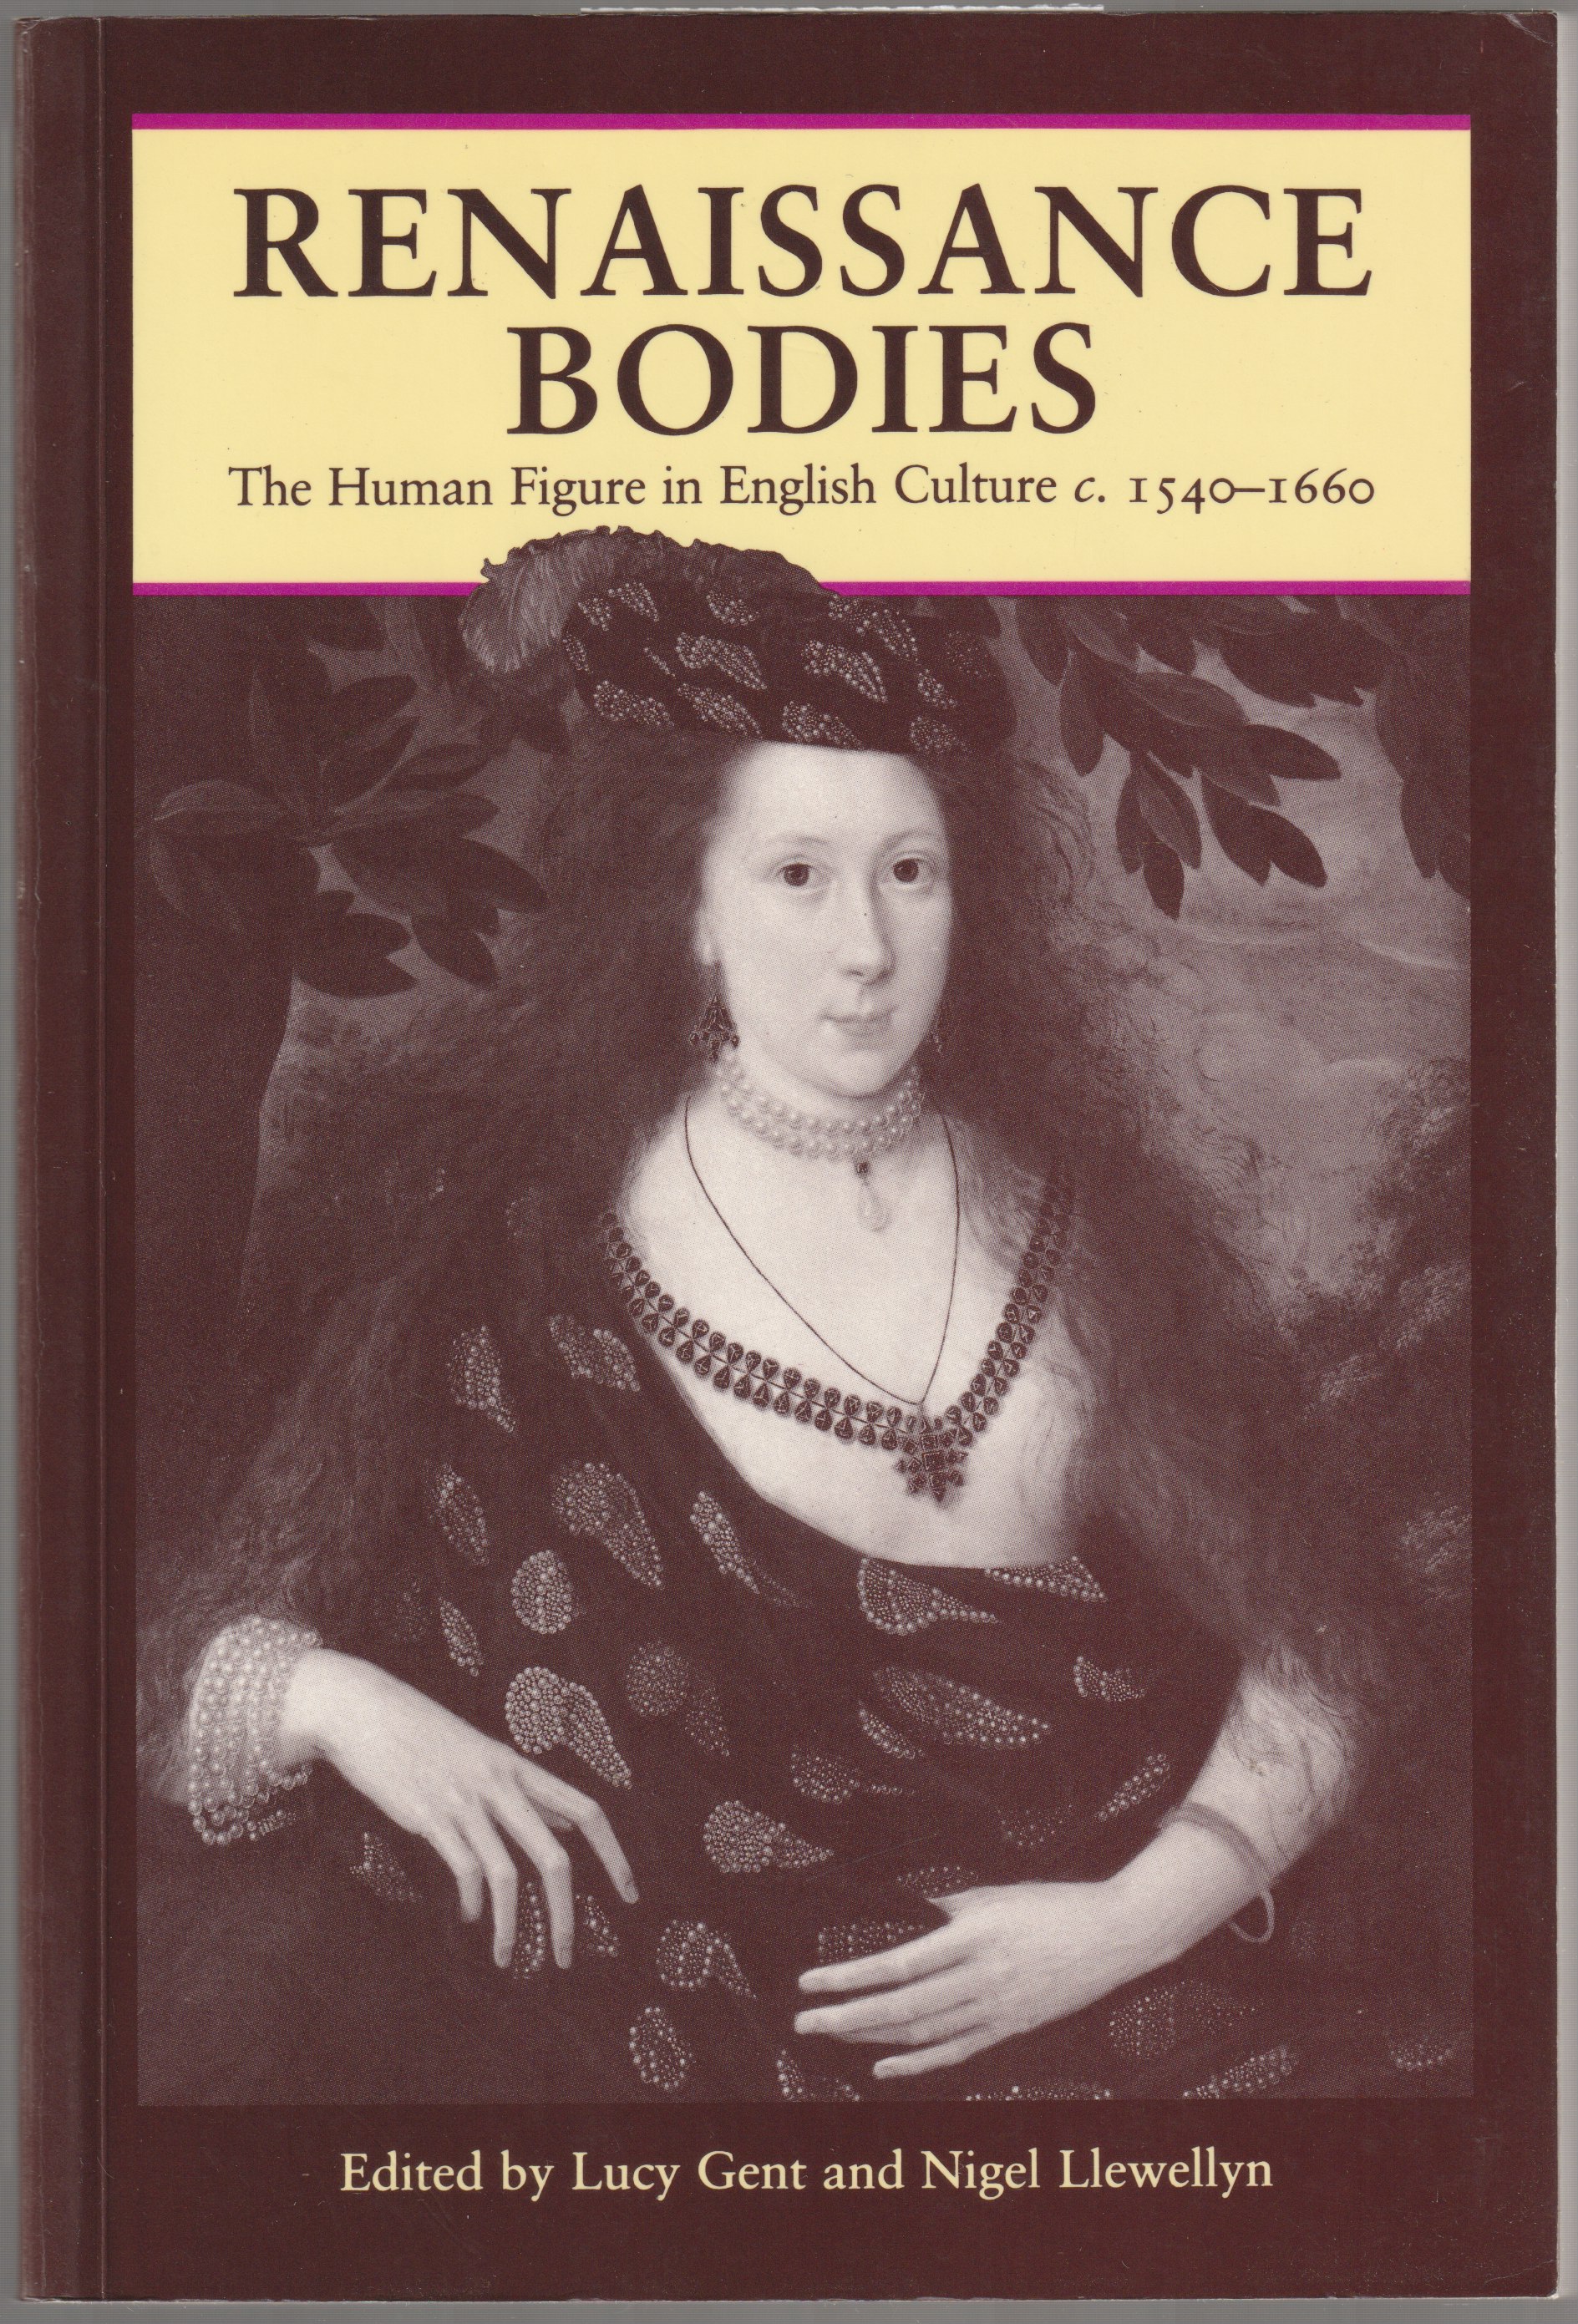 Renaissance bodies : the human figure in English culture, c. 1540-1660